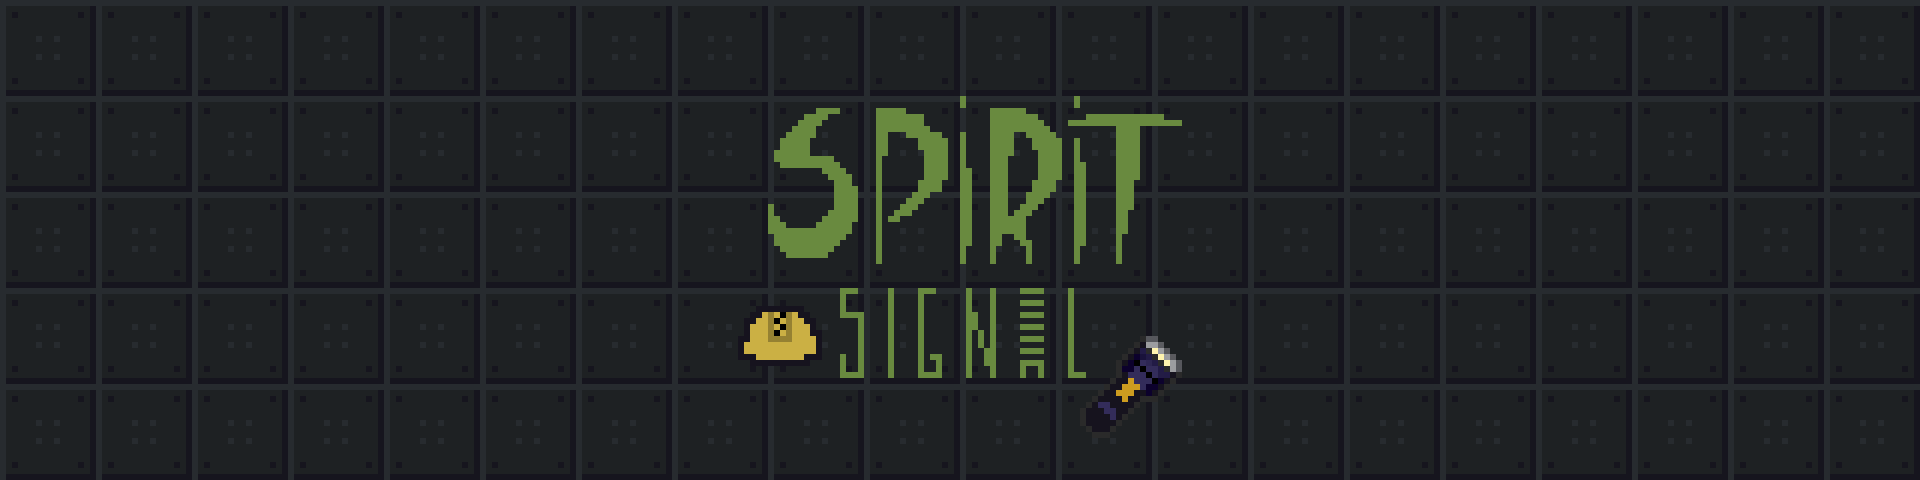 Spirit Signal